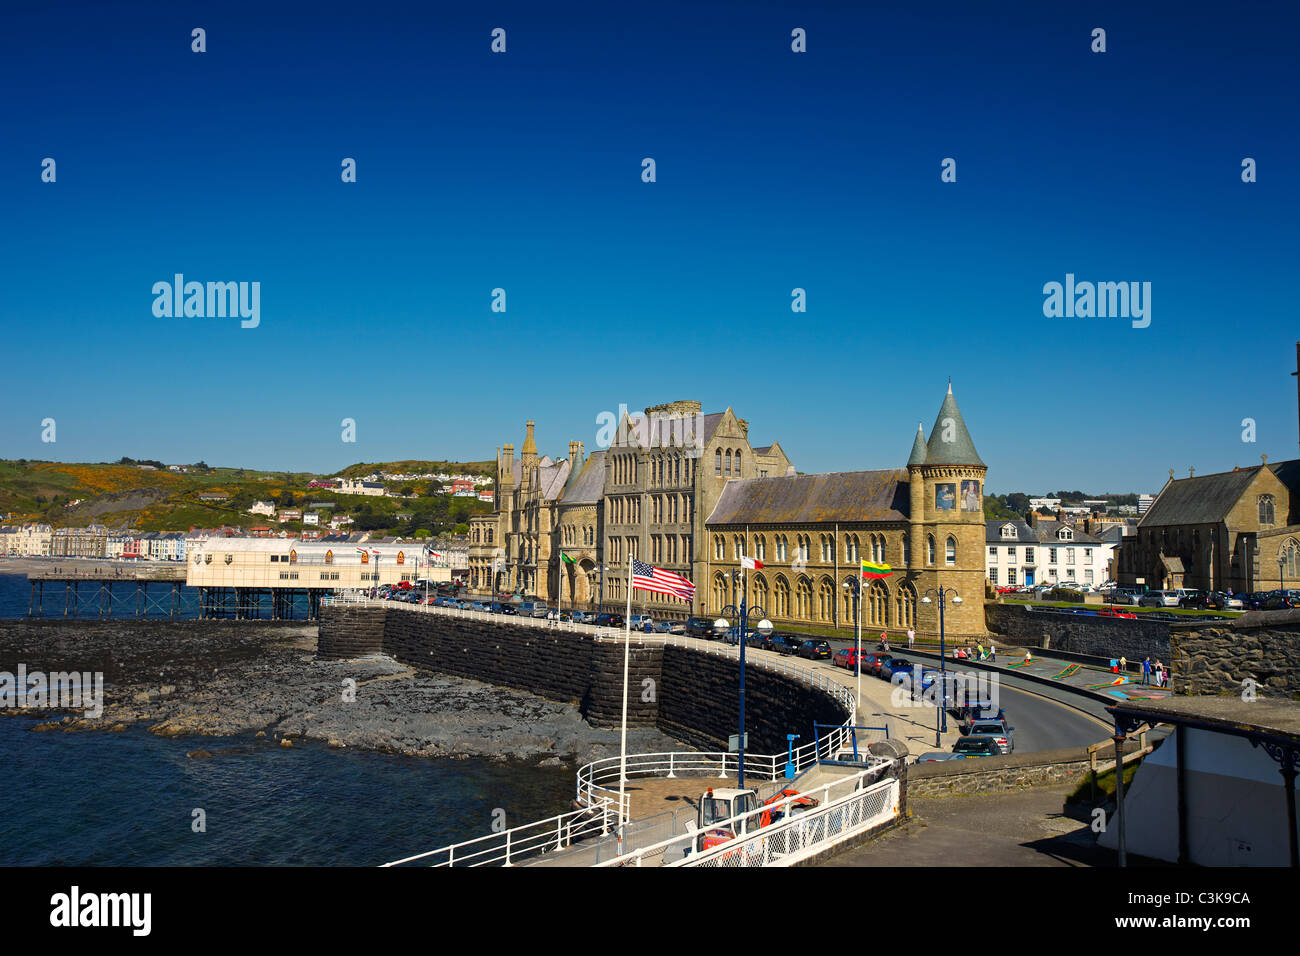 Aberystwyth, Ceredigion, pays de Galles, Royaume-Uni Banque D'Images